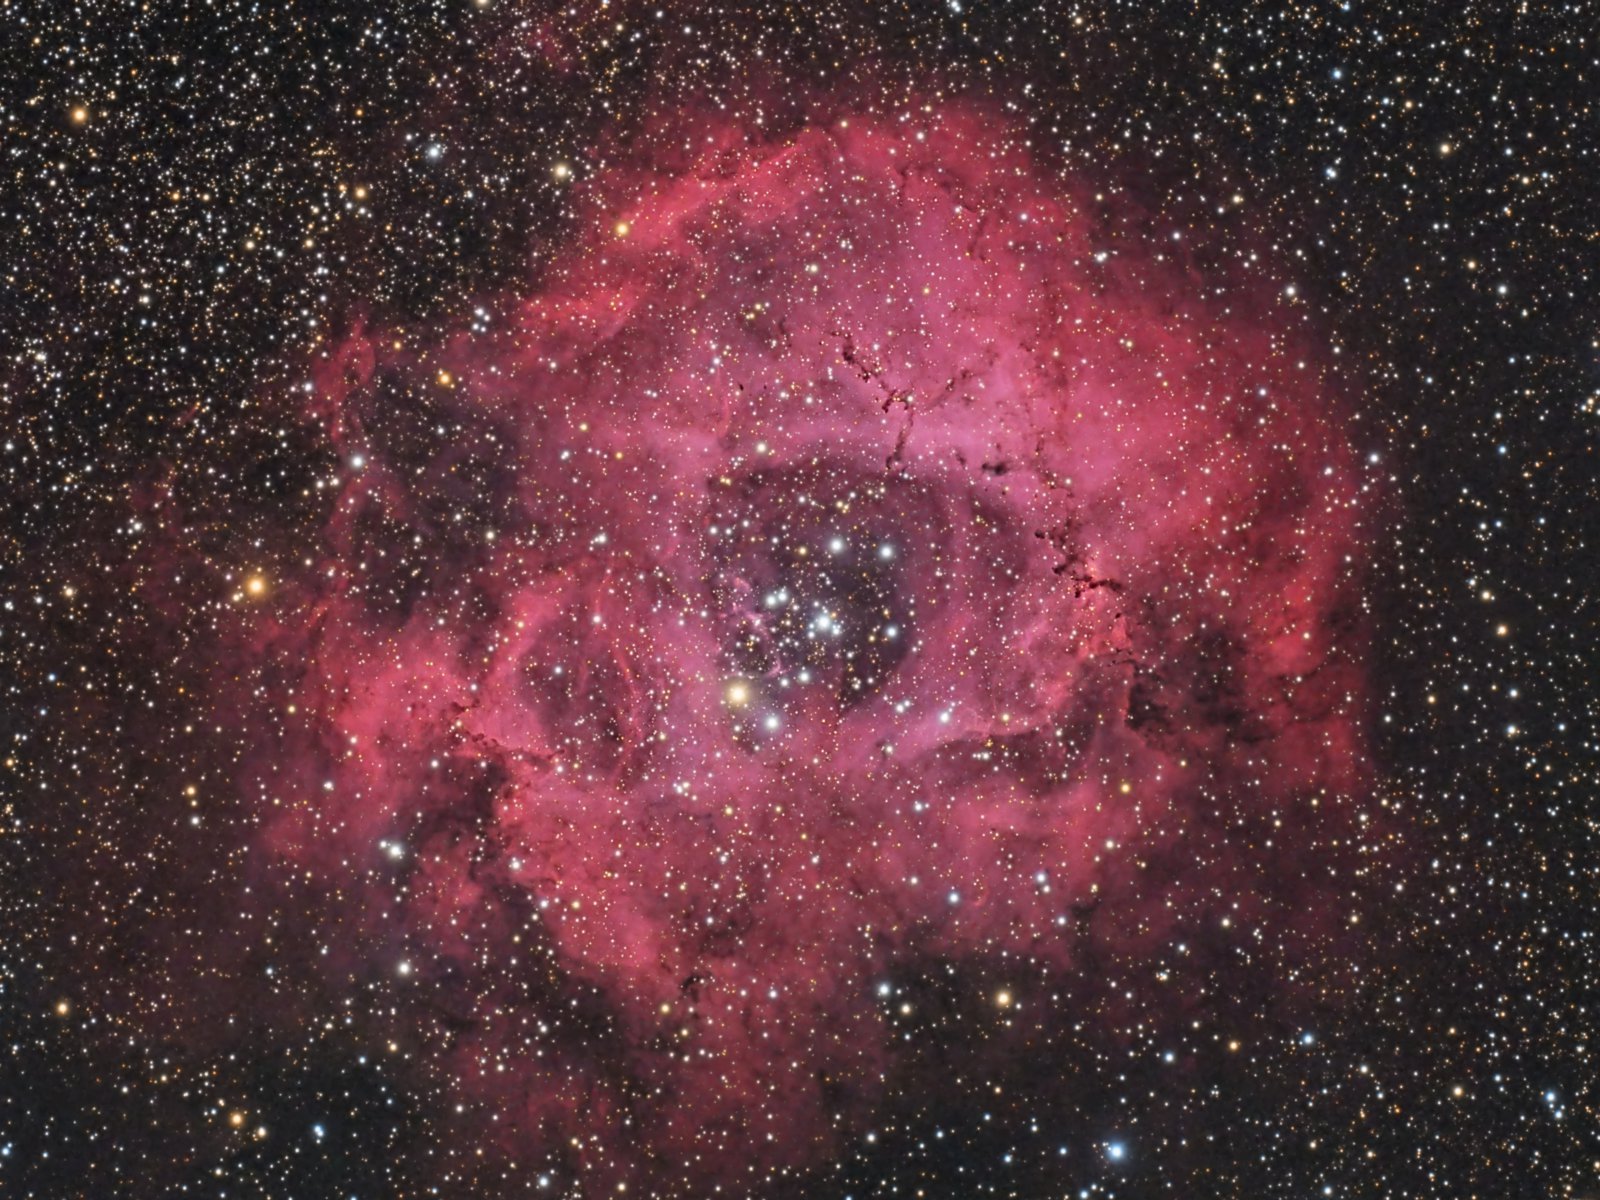 Rosette Nebula in HaRGB